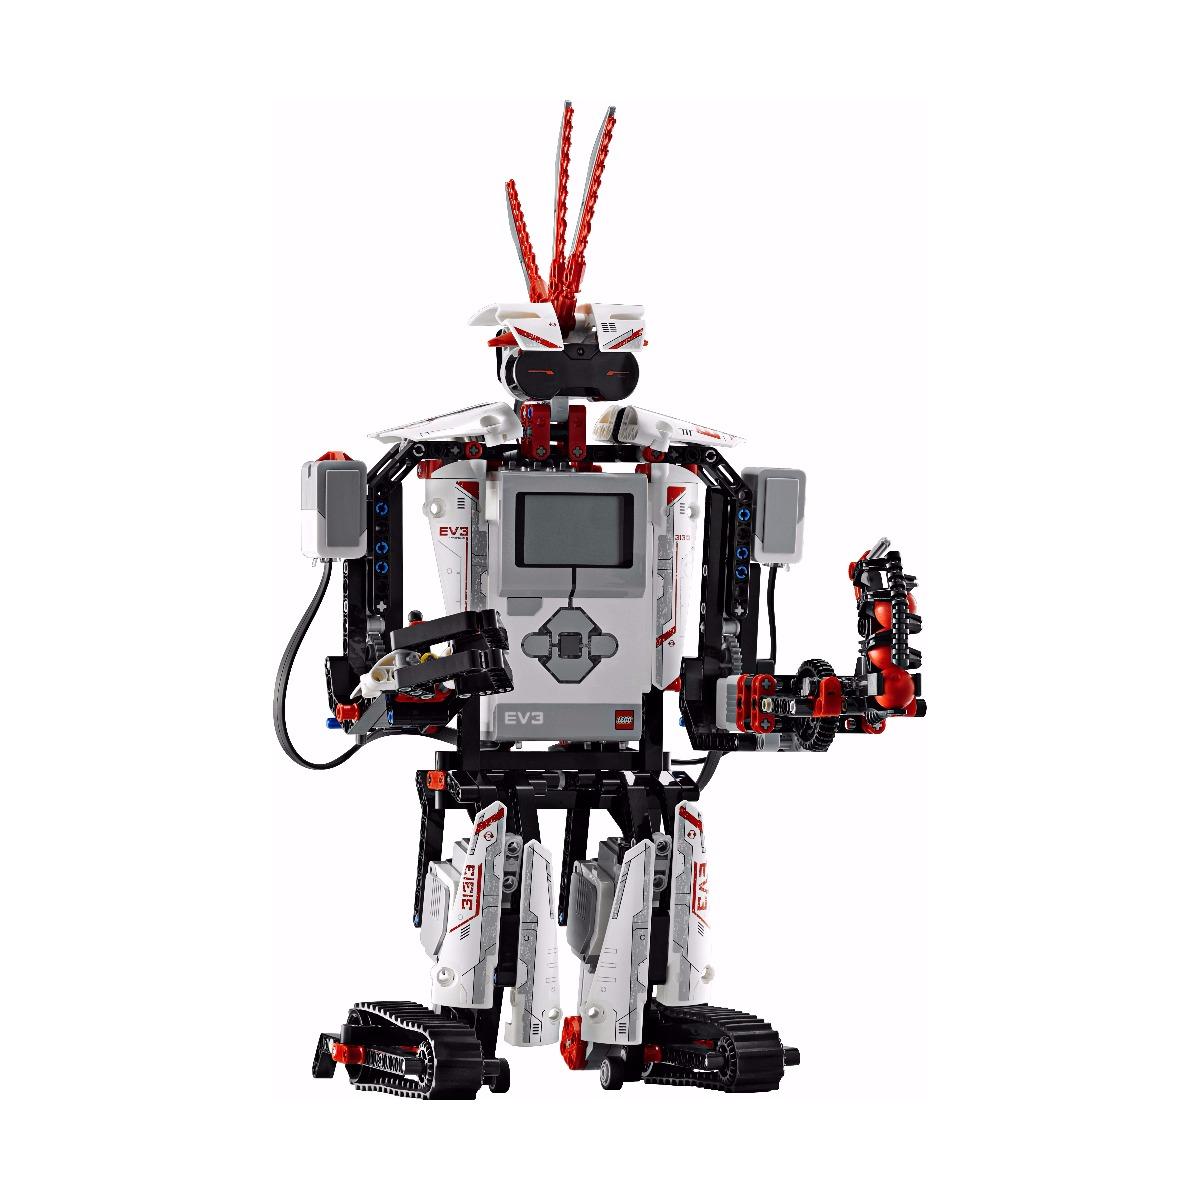 LEGO Самоделка: робот Гладиатор